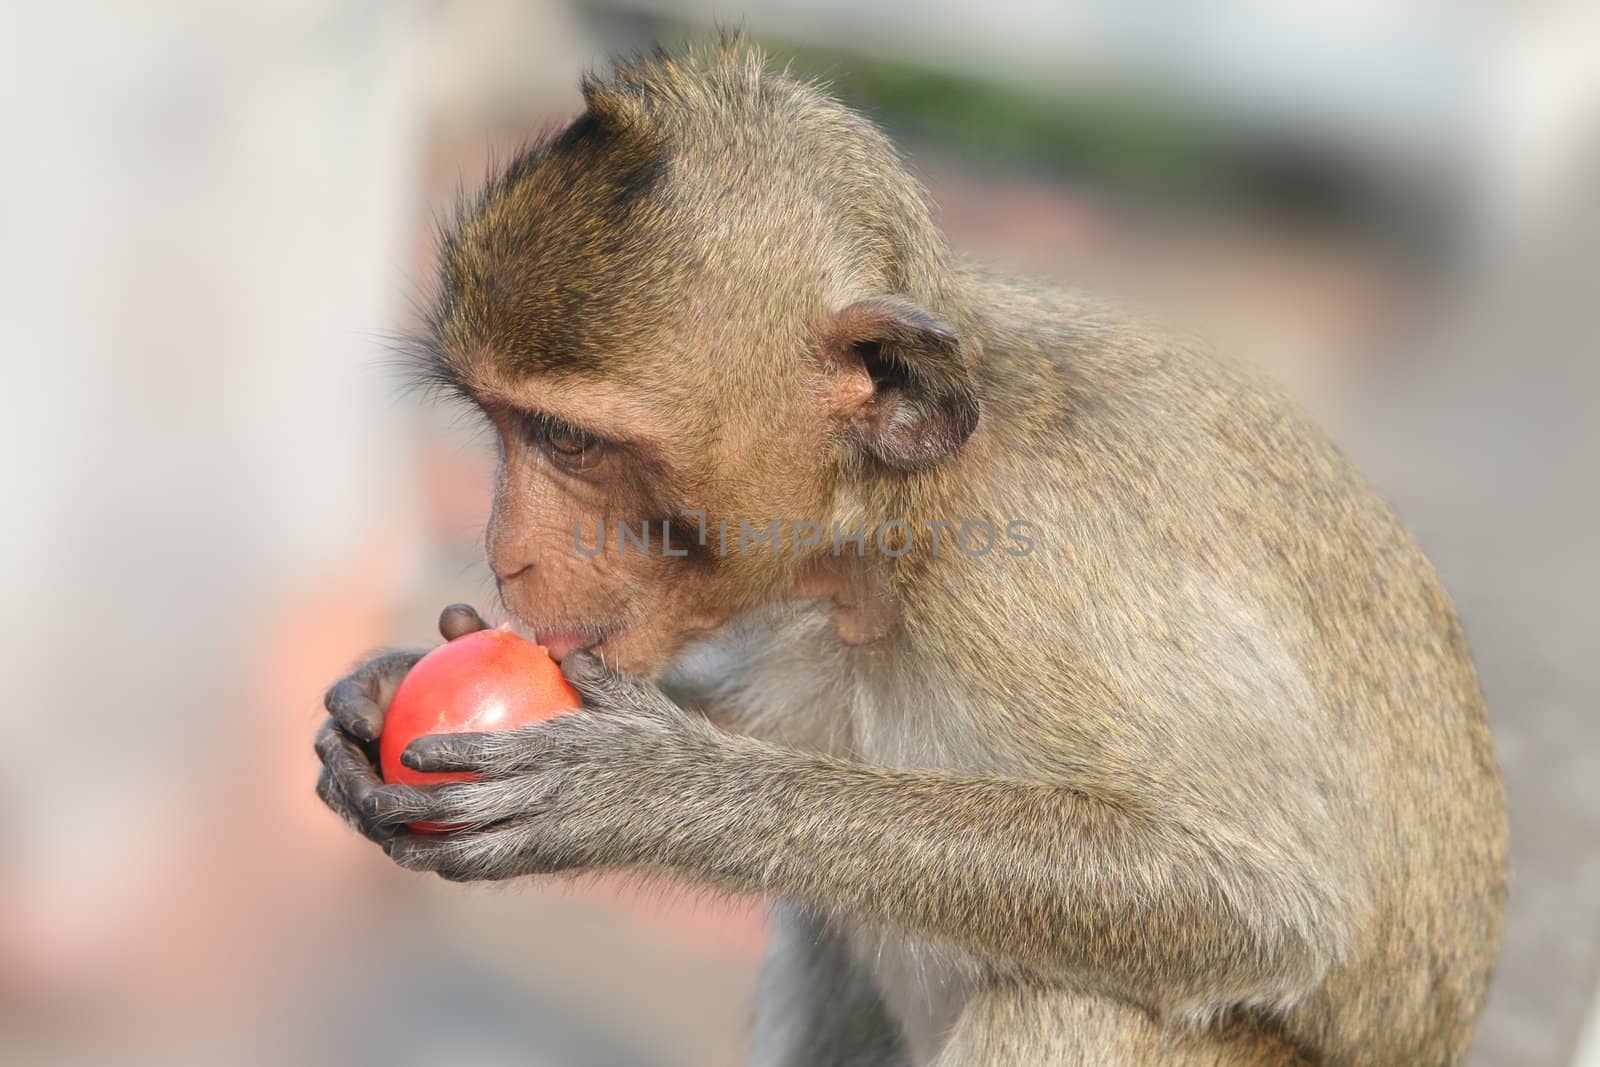 Little monkey eating tomato